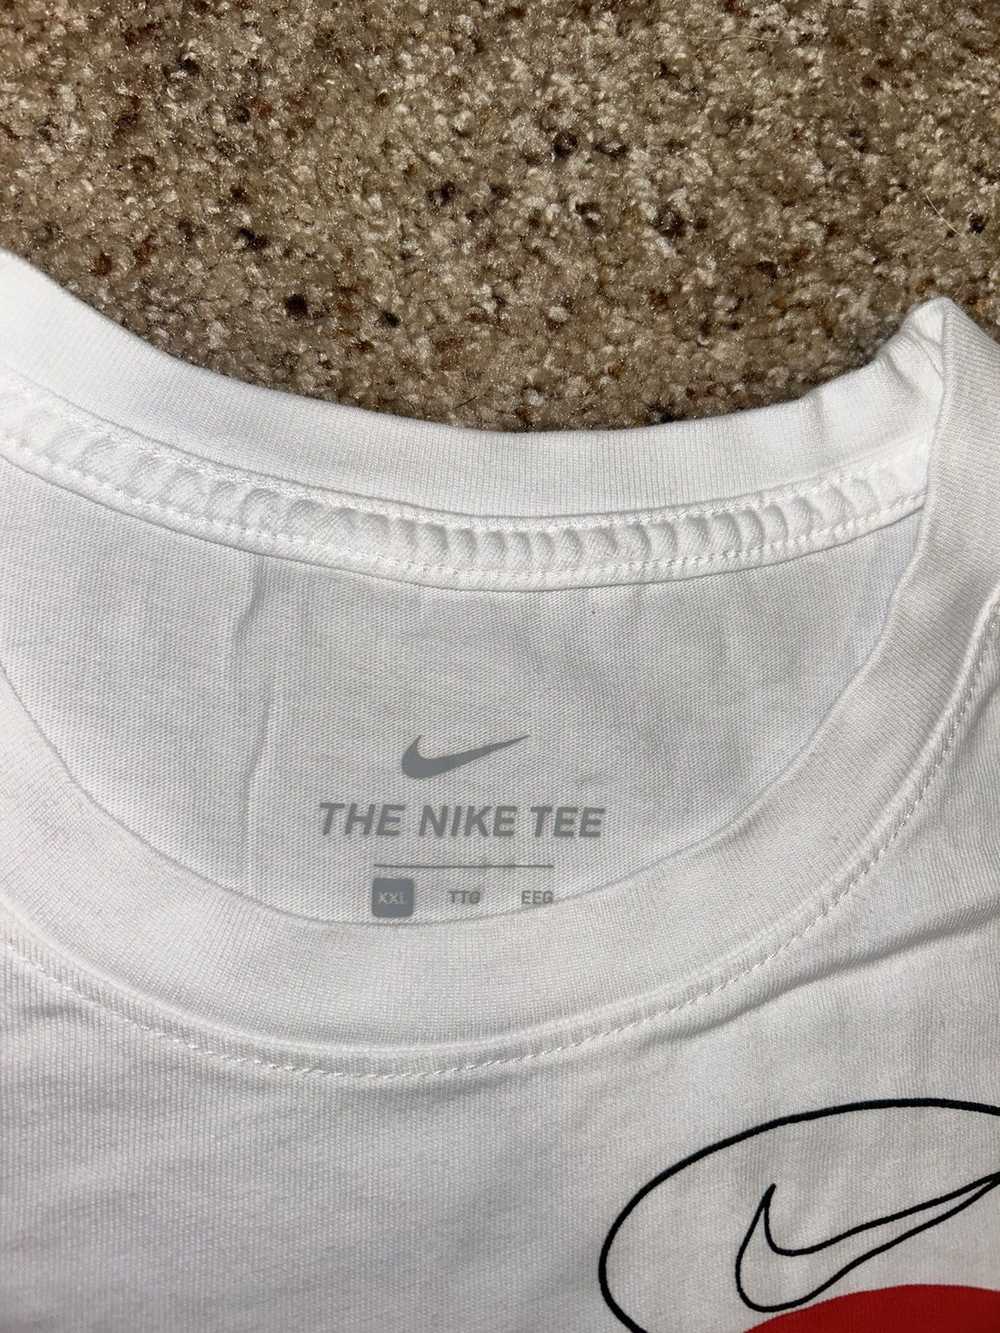 Nike NIKE ALL OVER LOGO PRINT TEE SHIRT - image 5